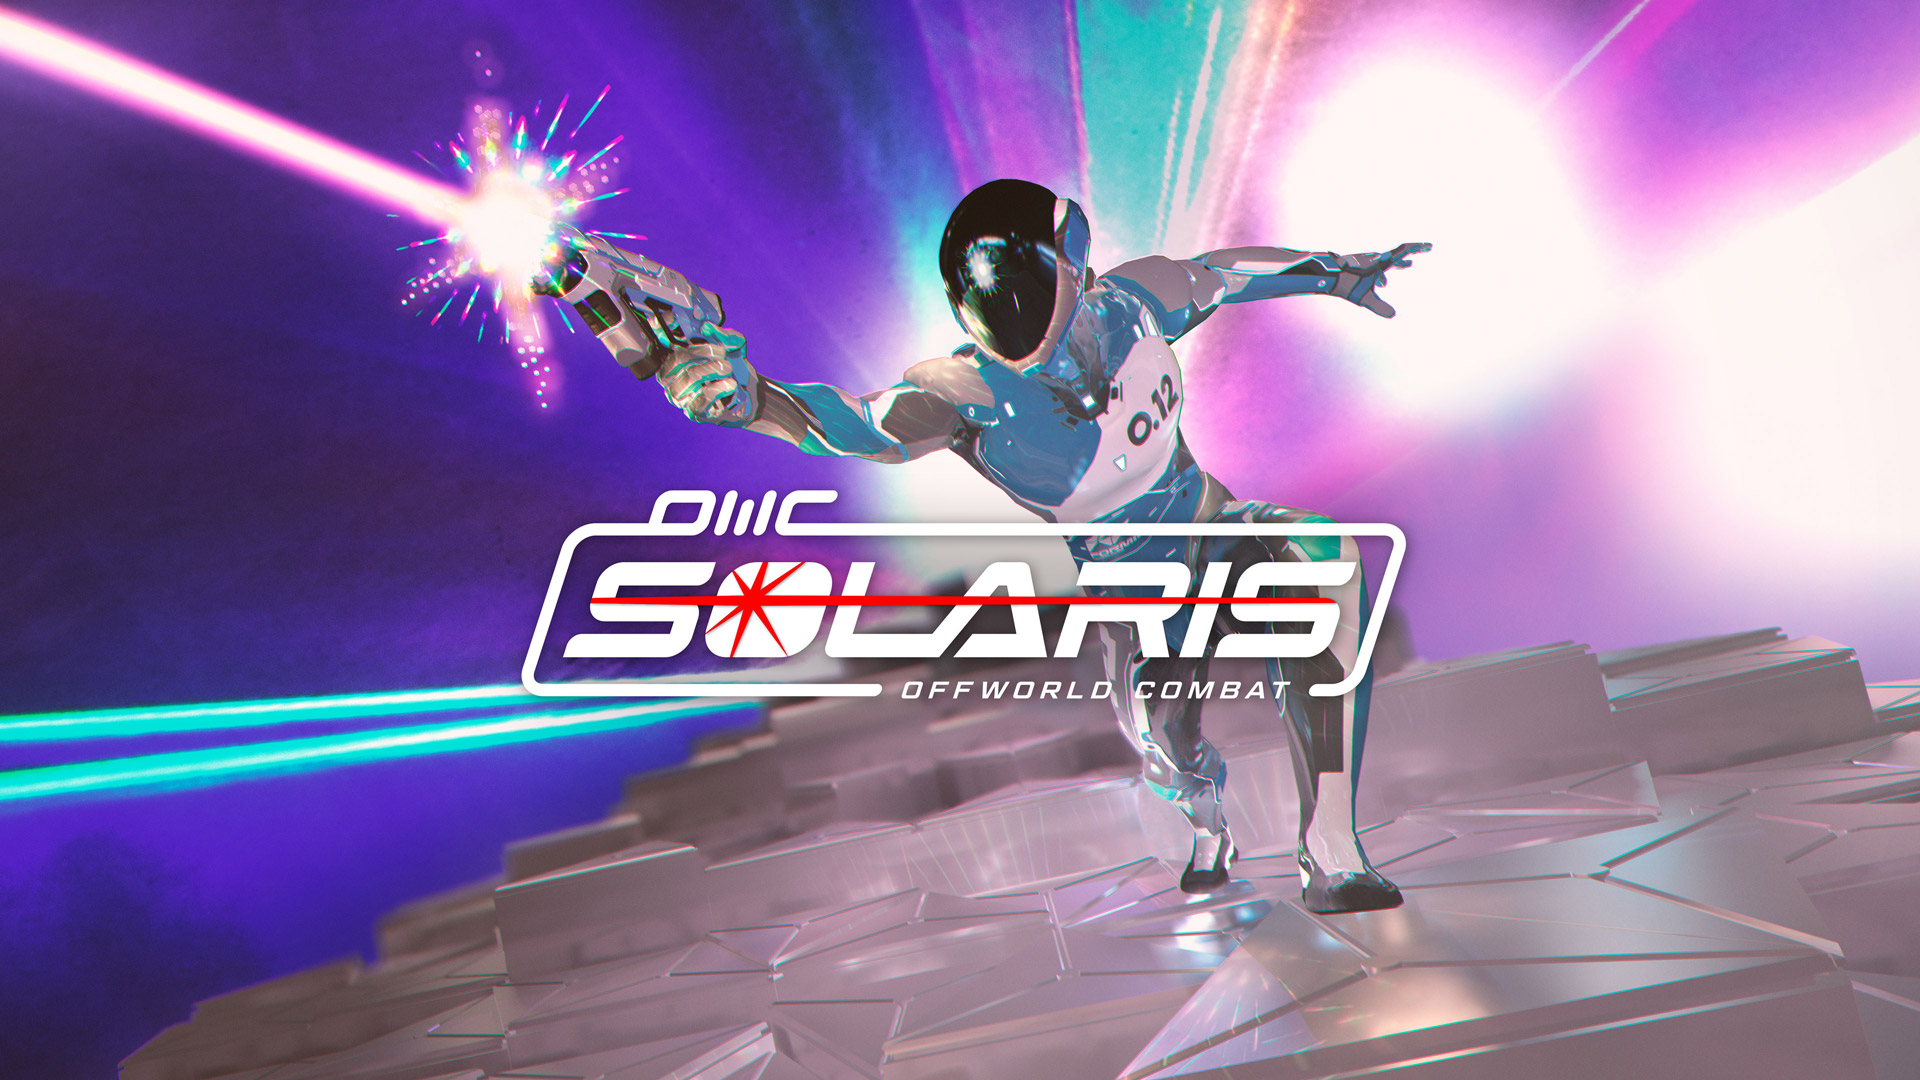 Solaris: A New Dawn - Zotiquest Games